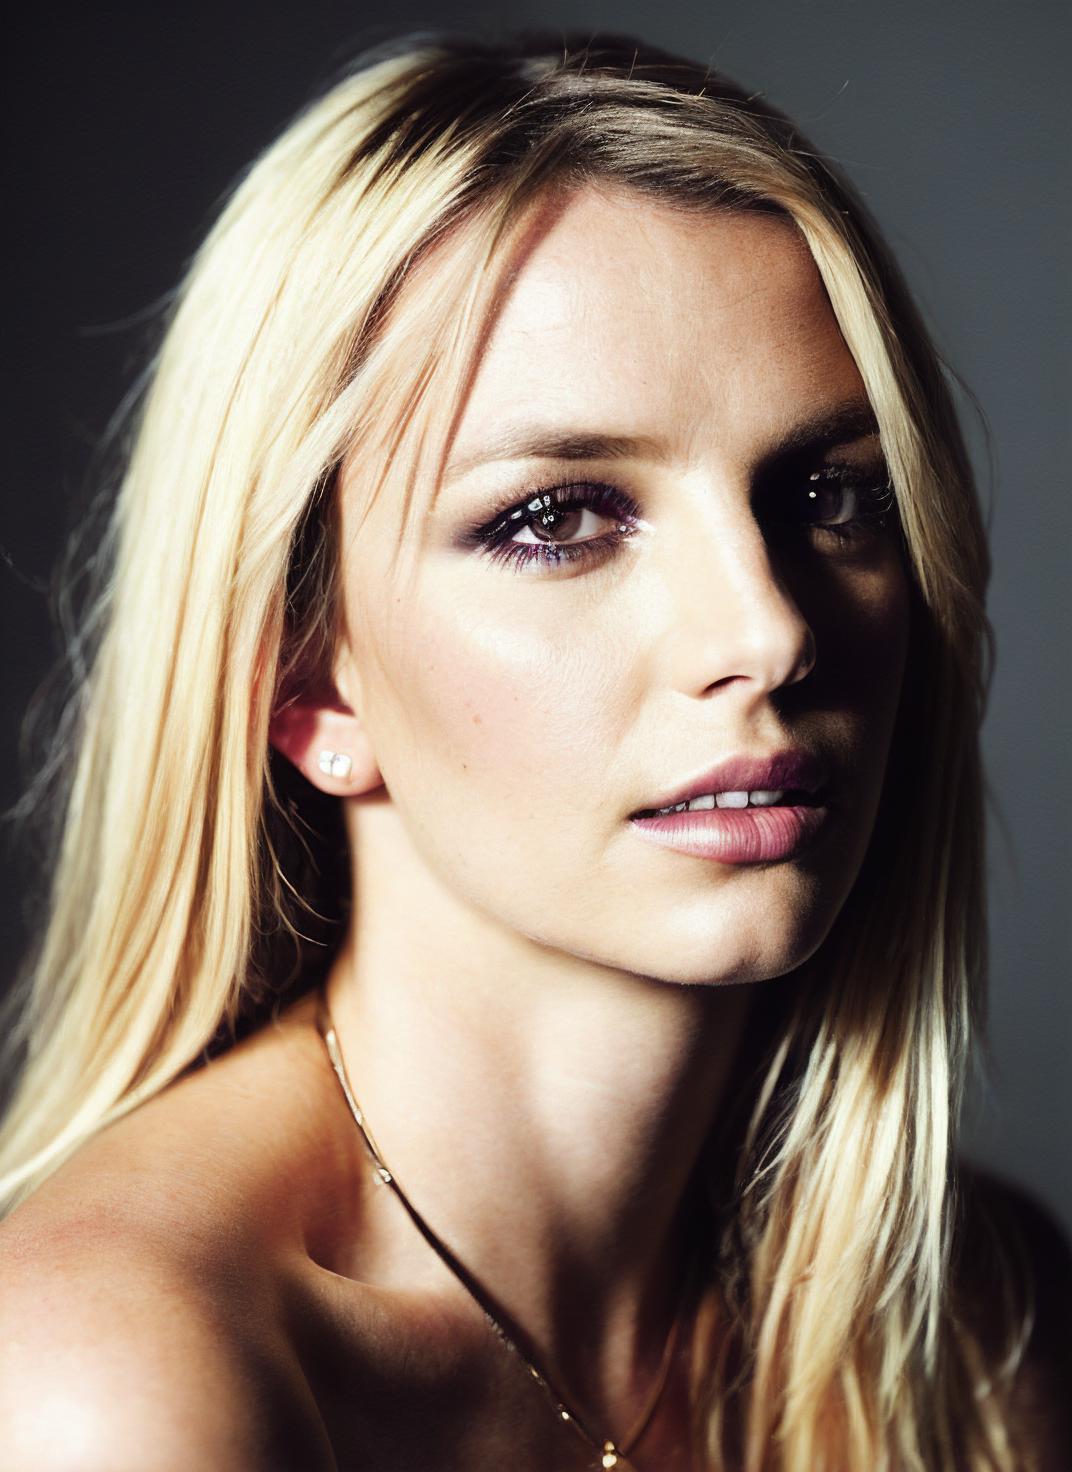 Britney Spears image by malcolmrey